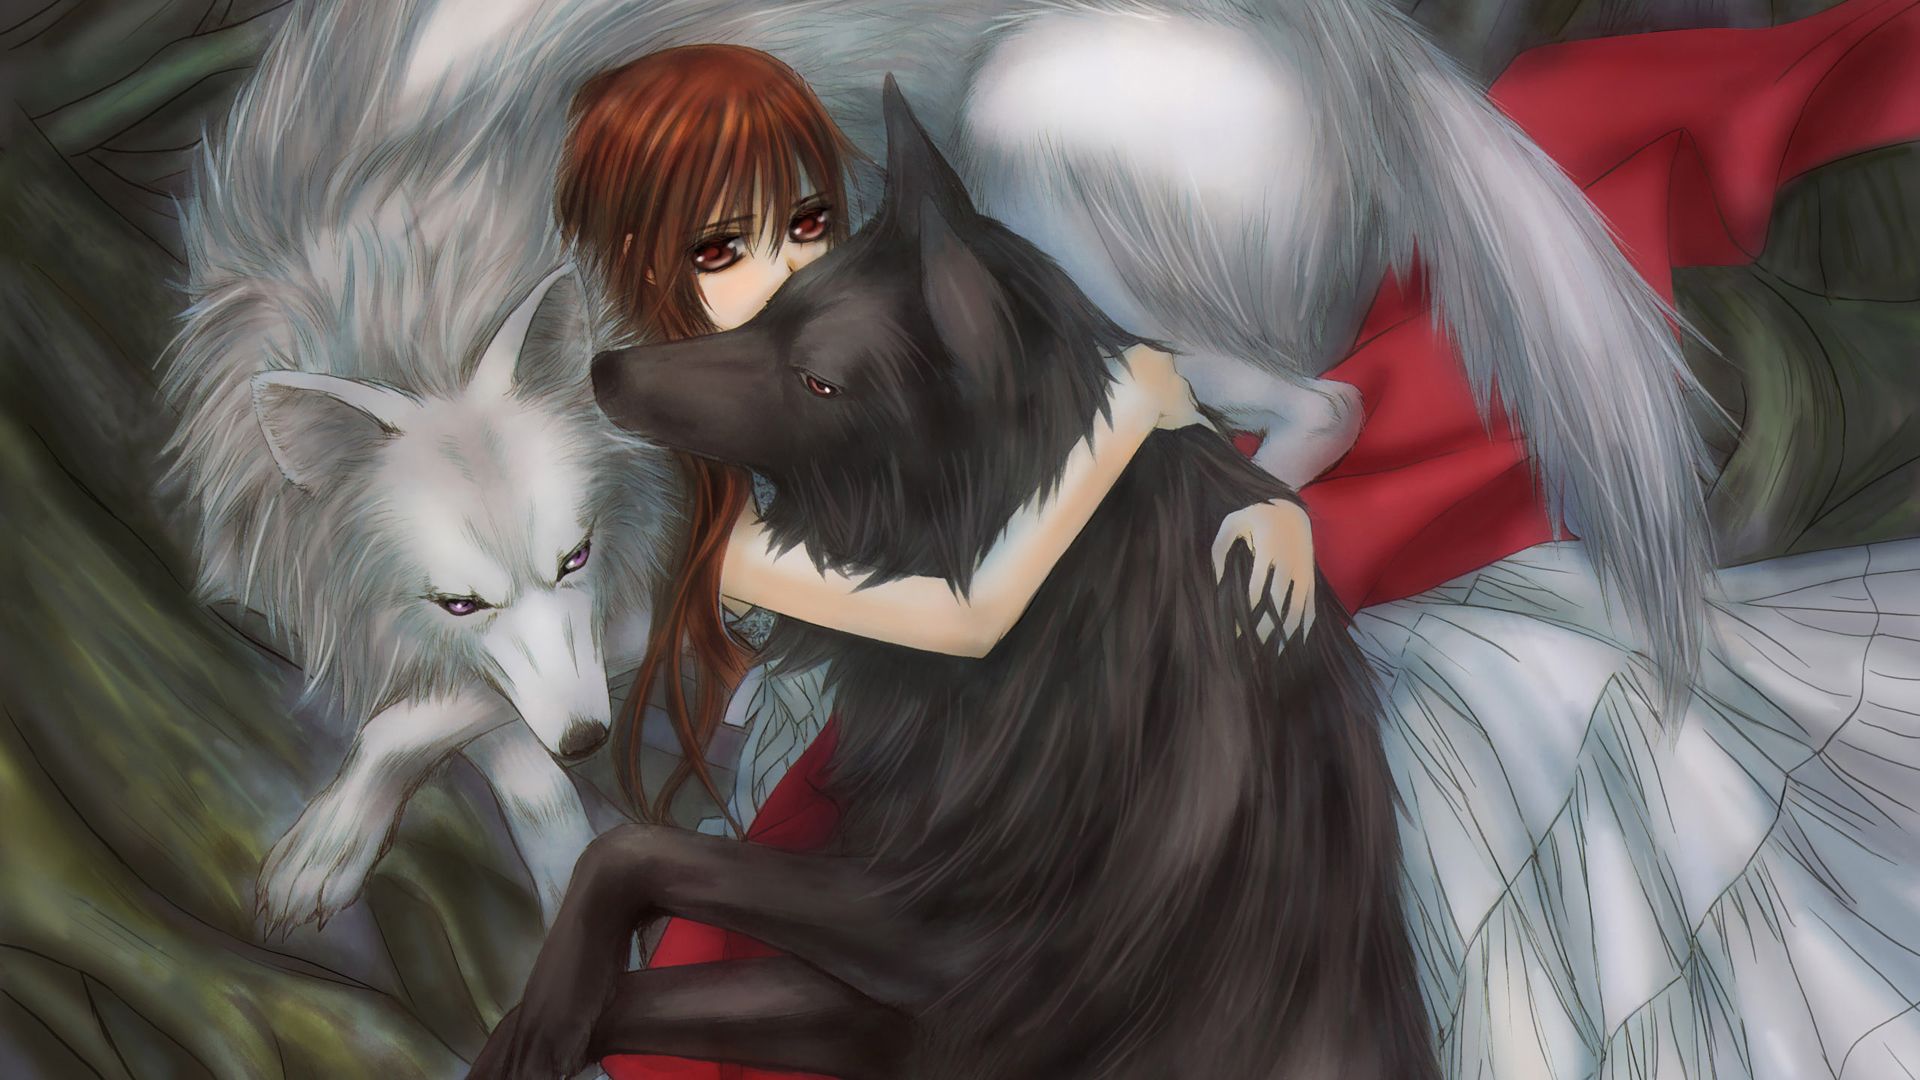 Download 1920x1080 HD Wallpaper vampire knight wolf girl redhead